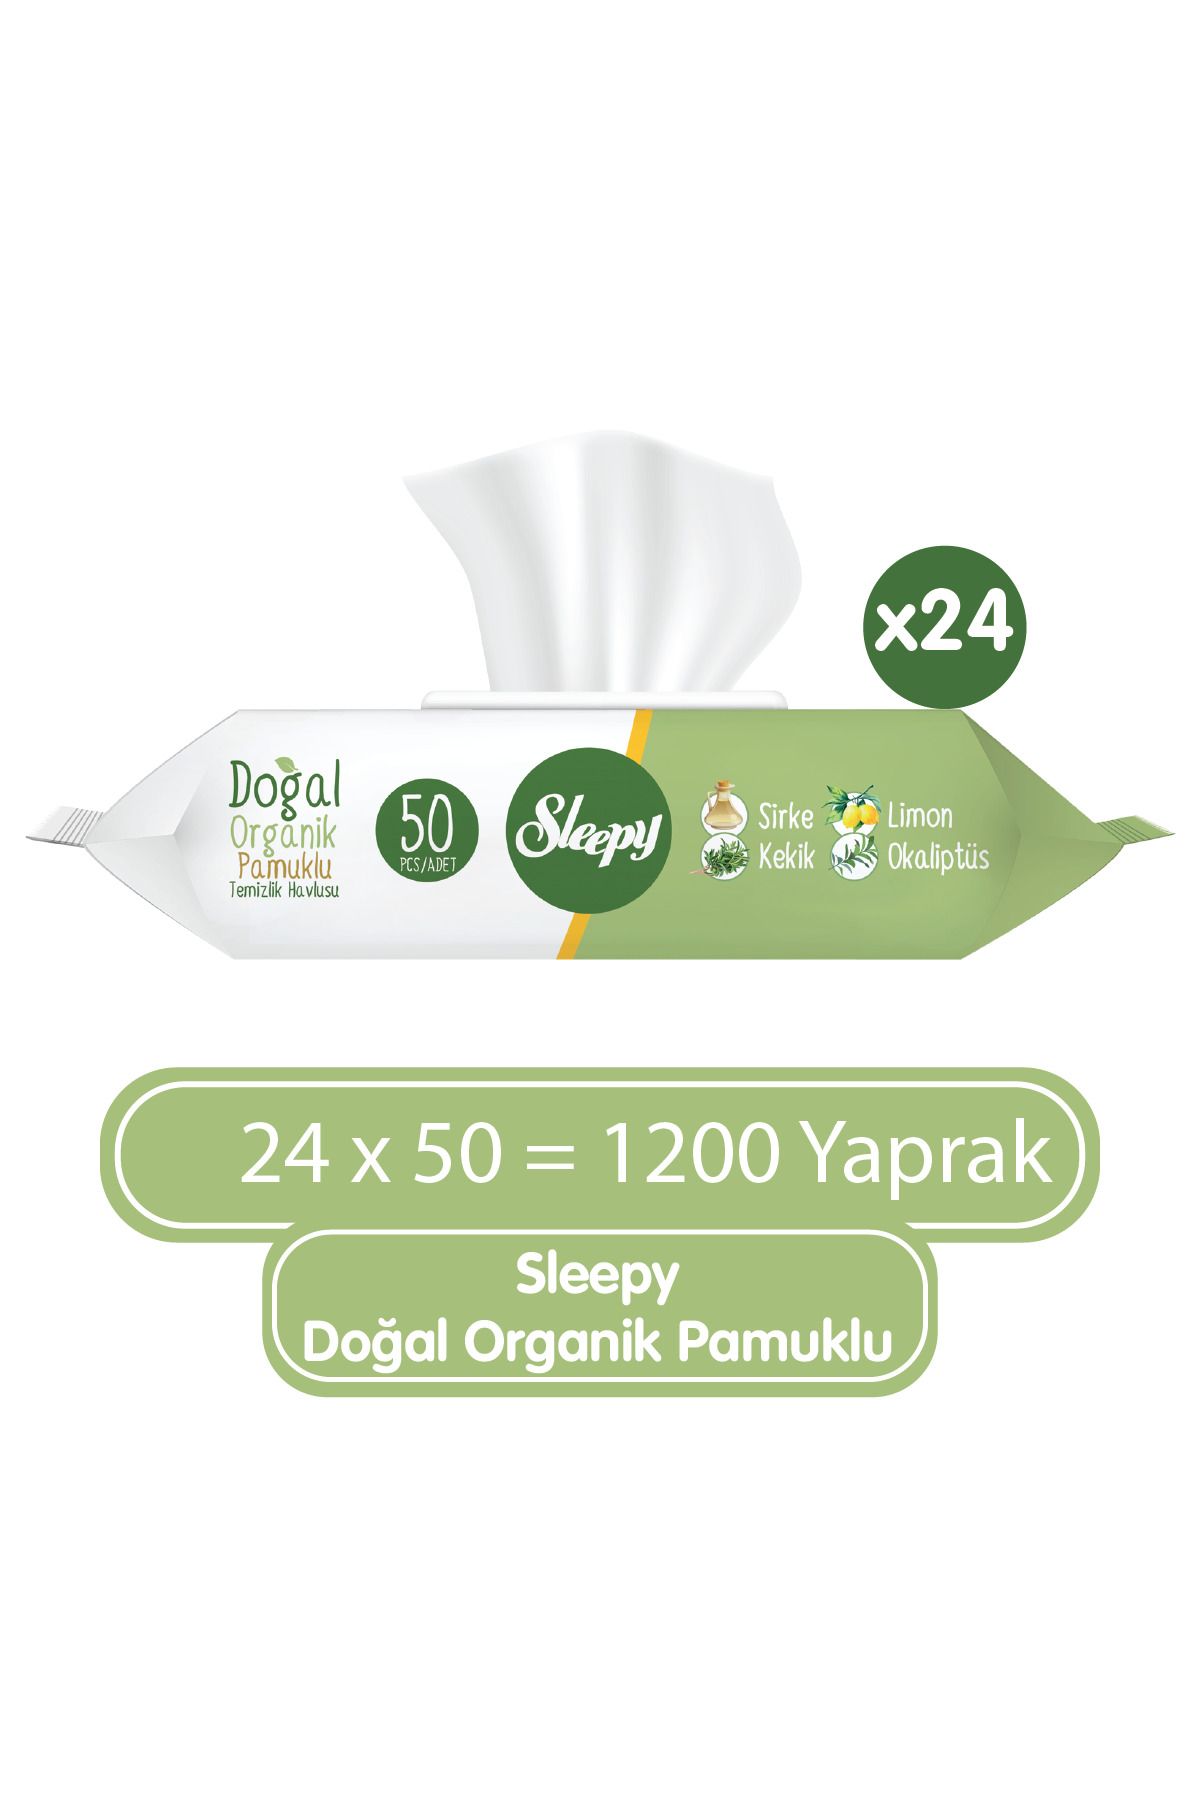 Sleepy Doğal Organik Pamuklu Temizlik Havlusu 24x50